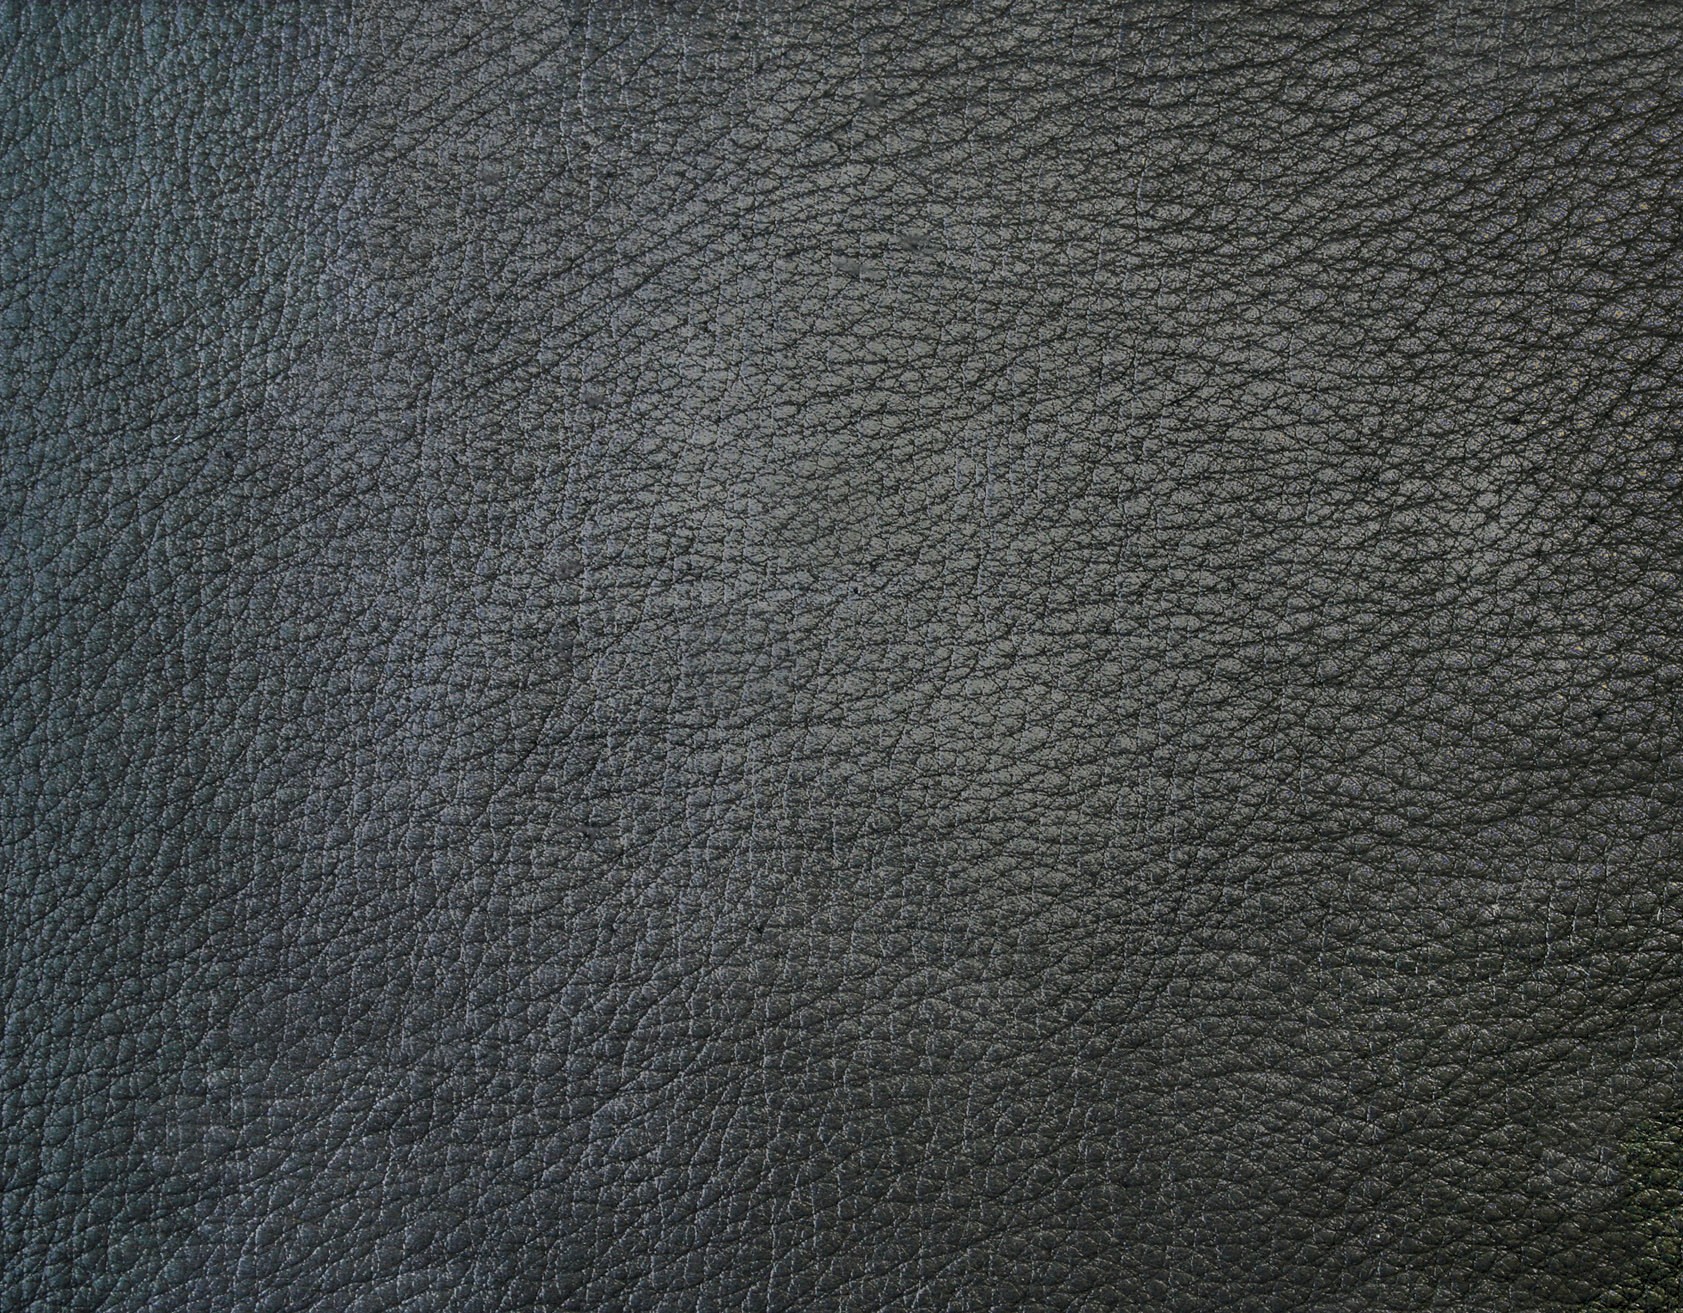 General 1683x1313 leather texture minimalism